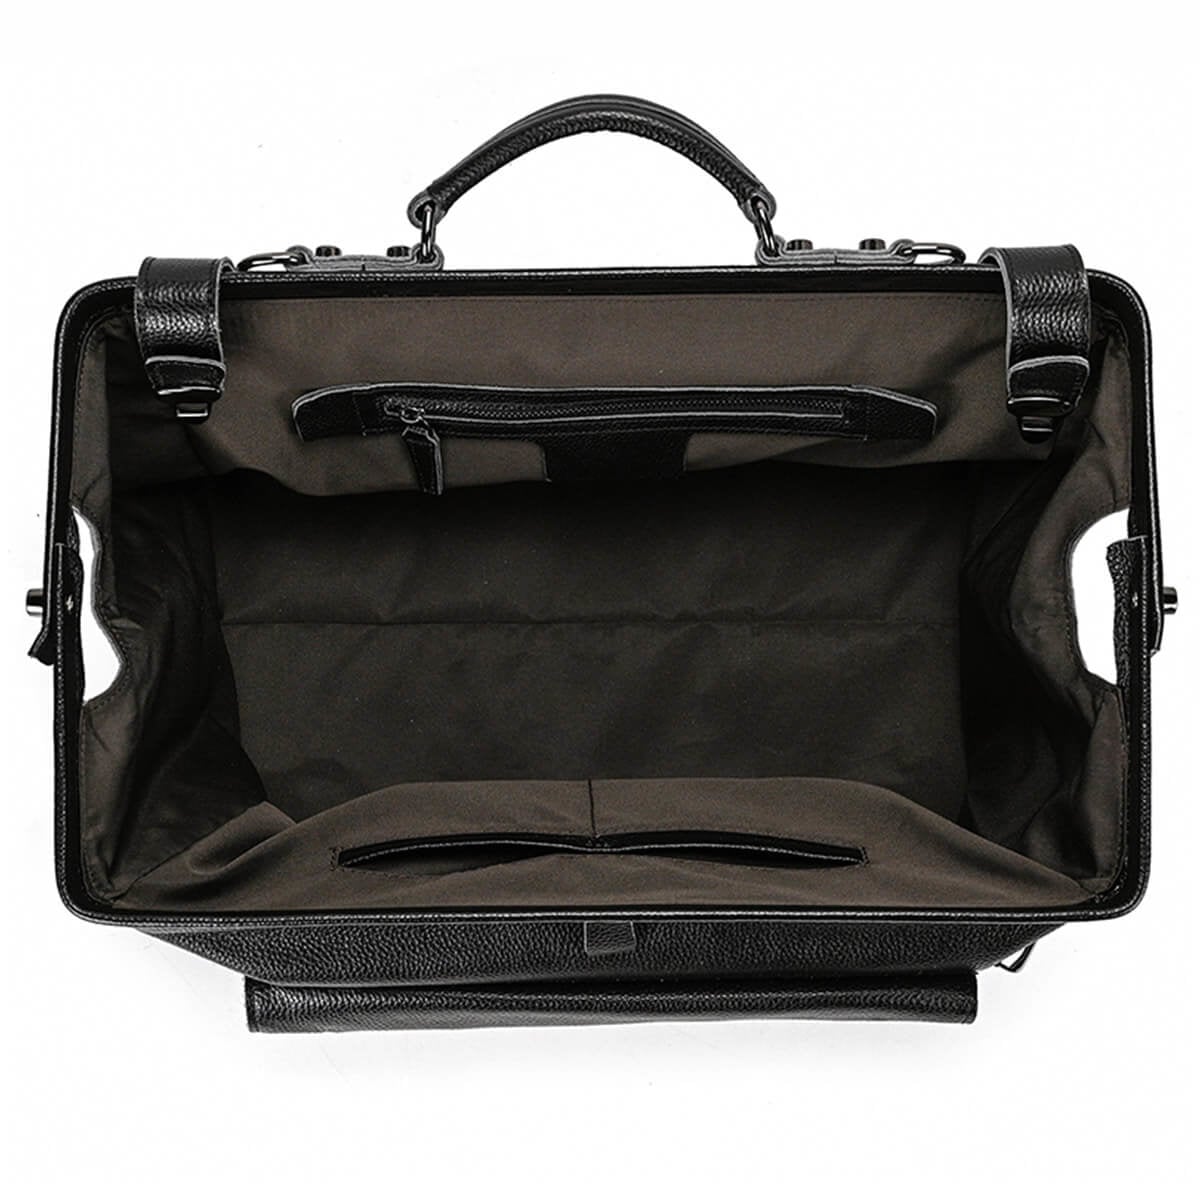 Black Leather Duffle Bag Travel Luggage